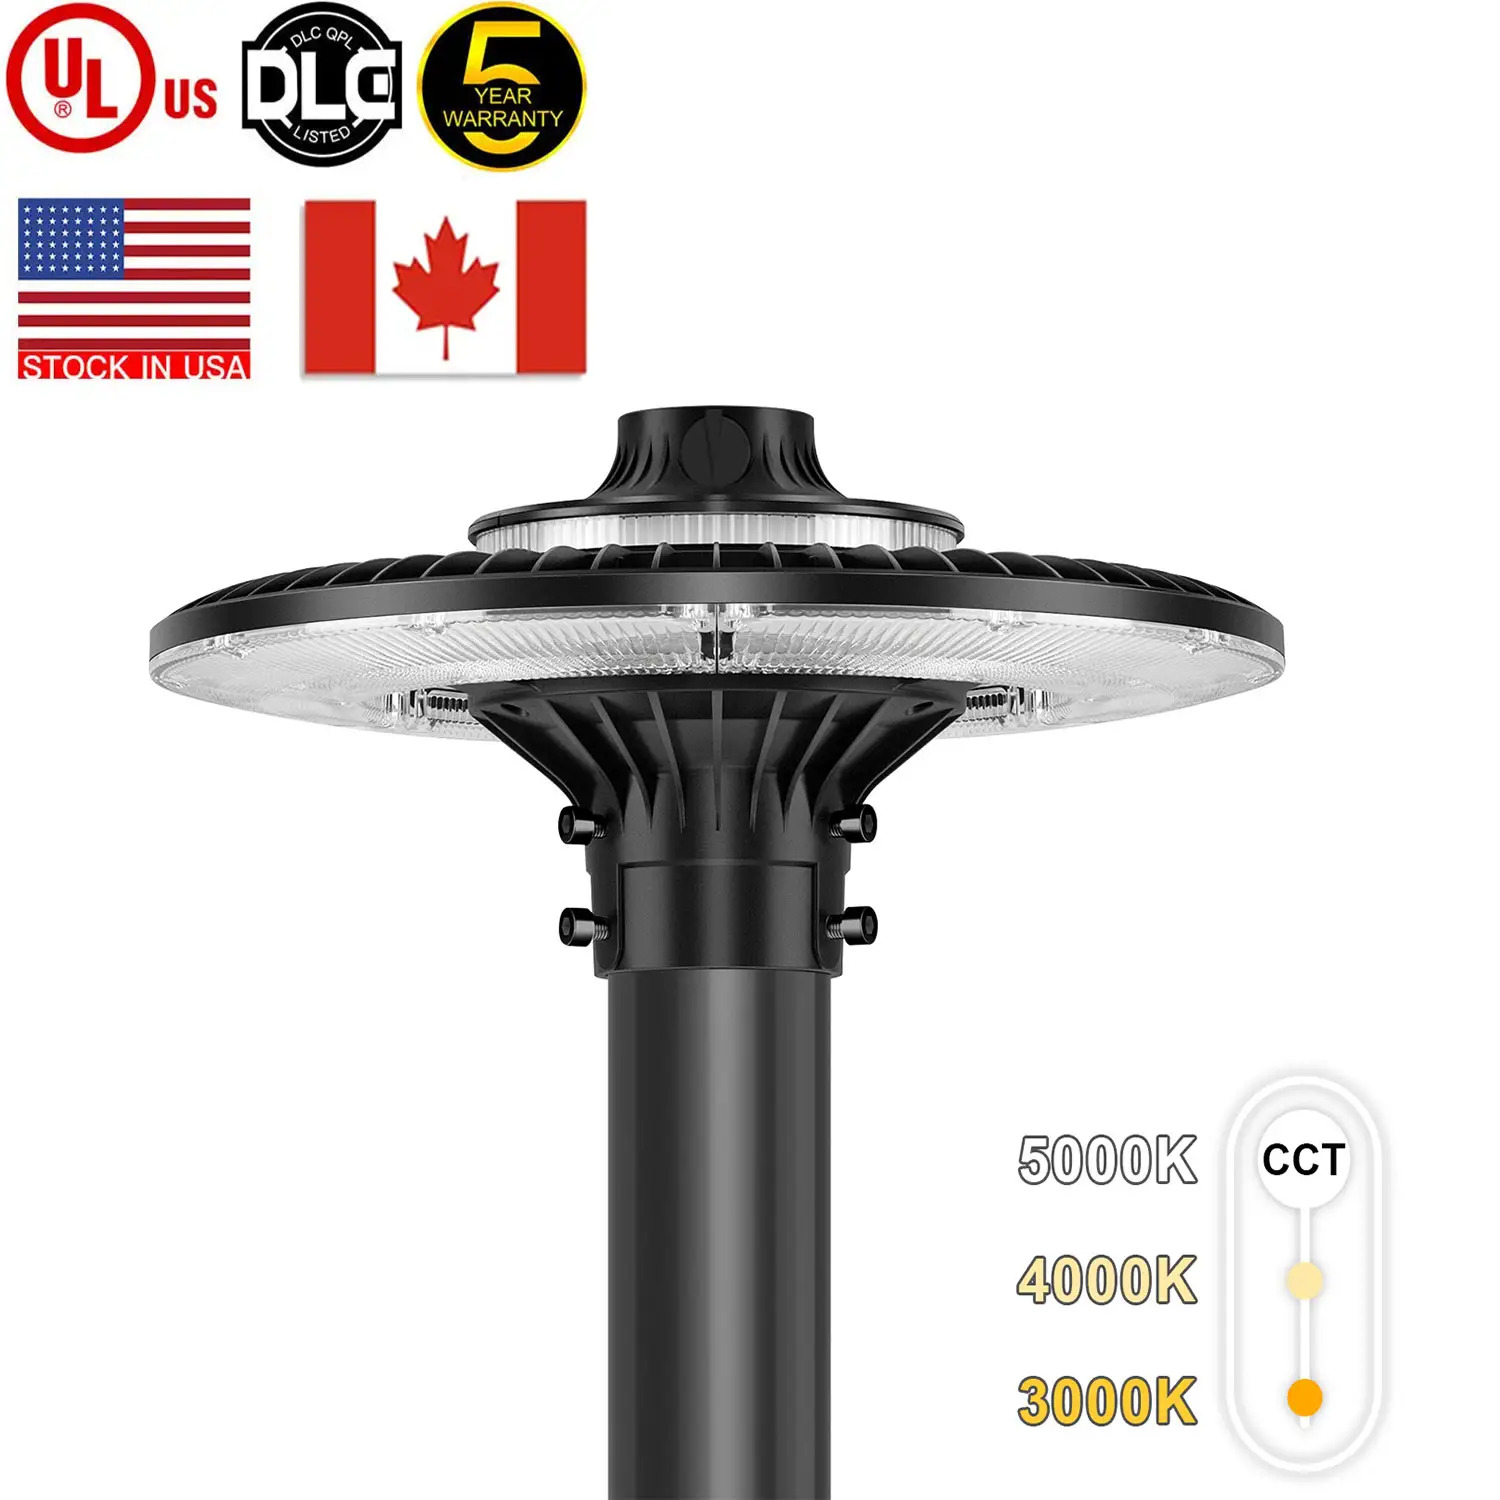 Lampu tiang LED badan aluminium, lampu ABS bodi ETL bersertifikat ETL, lampu tiang jalan halaman luar ruangan IP65, kualitas tinggi 60w-200W